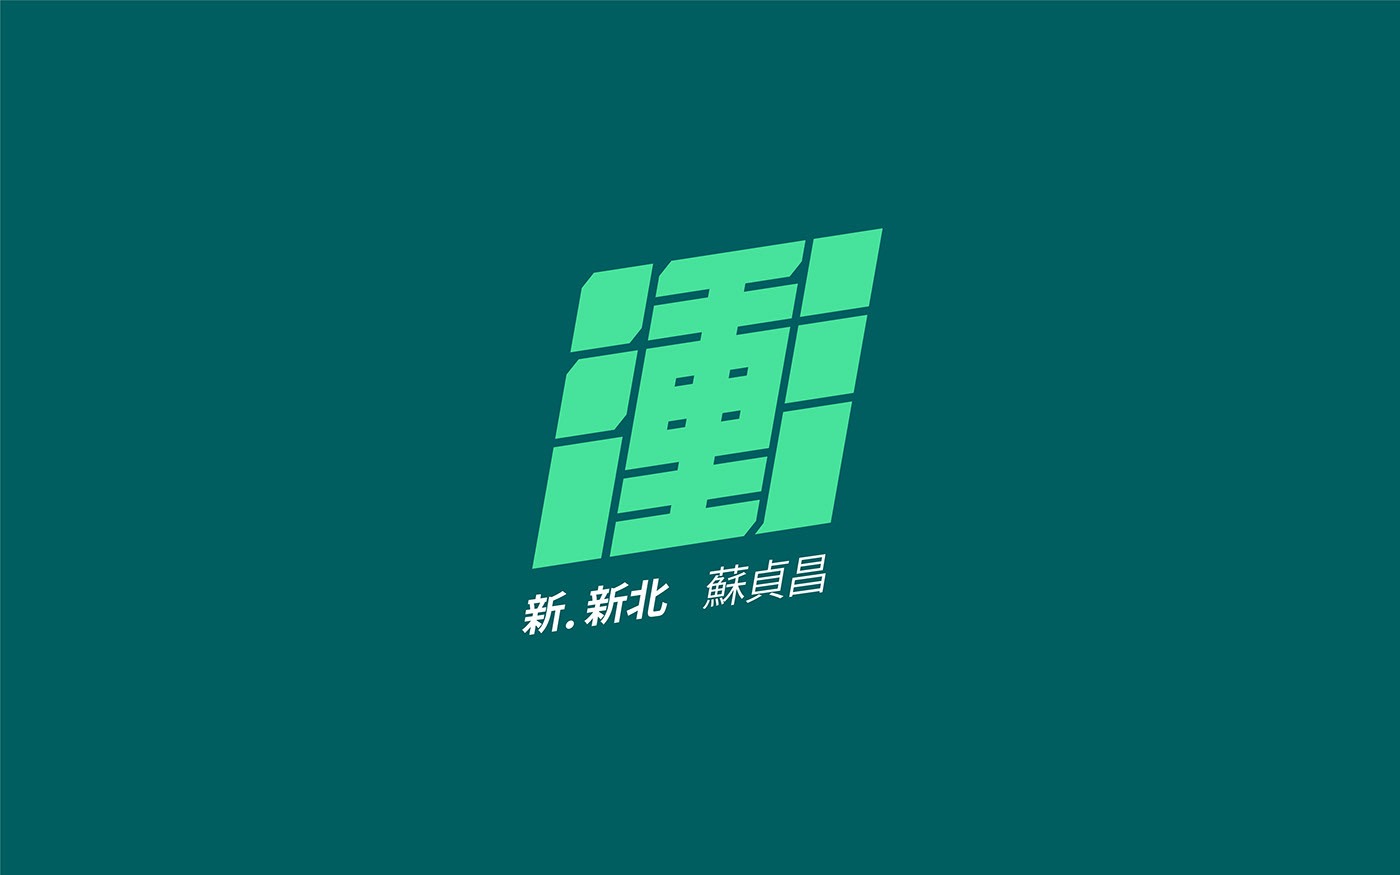 選舉 Election VI logo go lightball 蘇貞昌 閃電 視覺識別